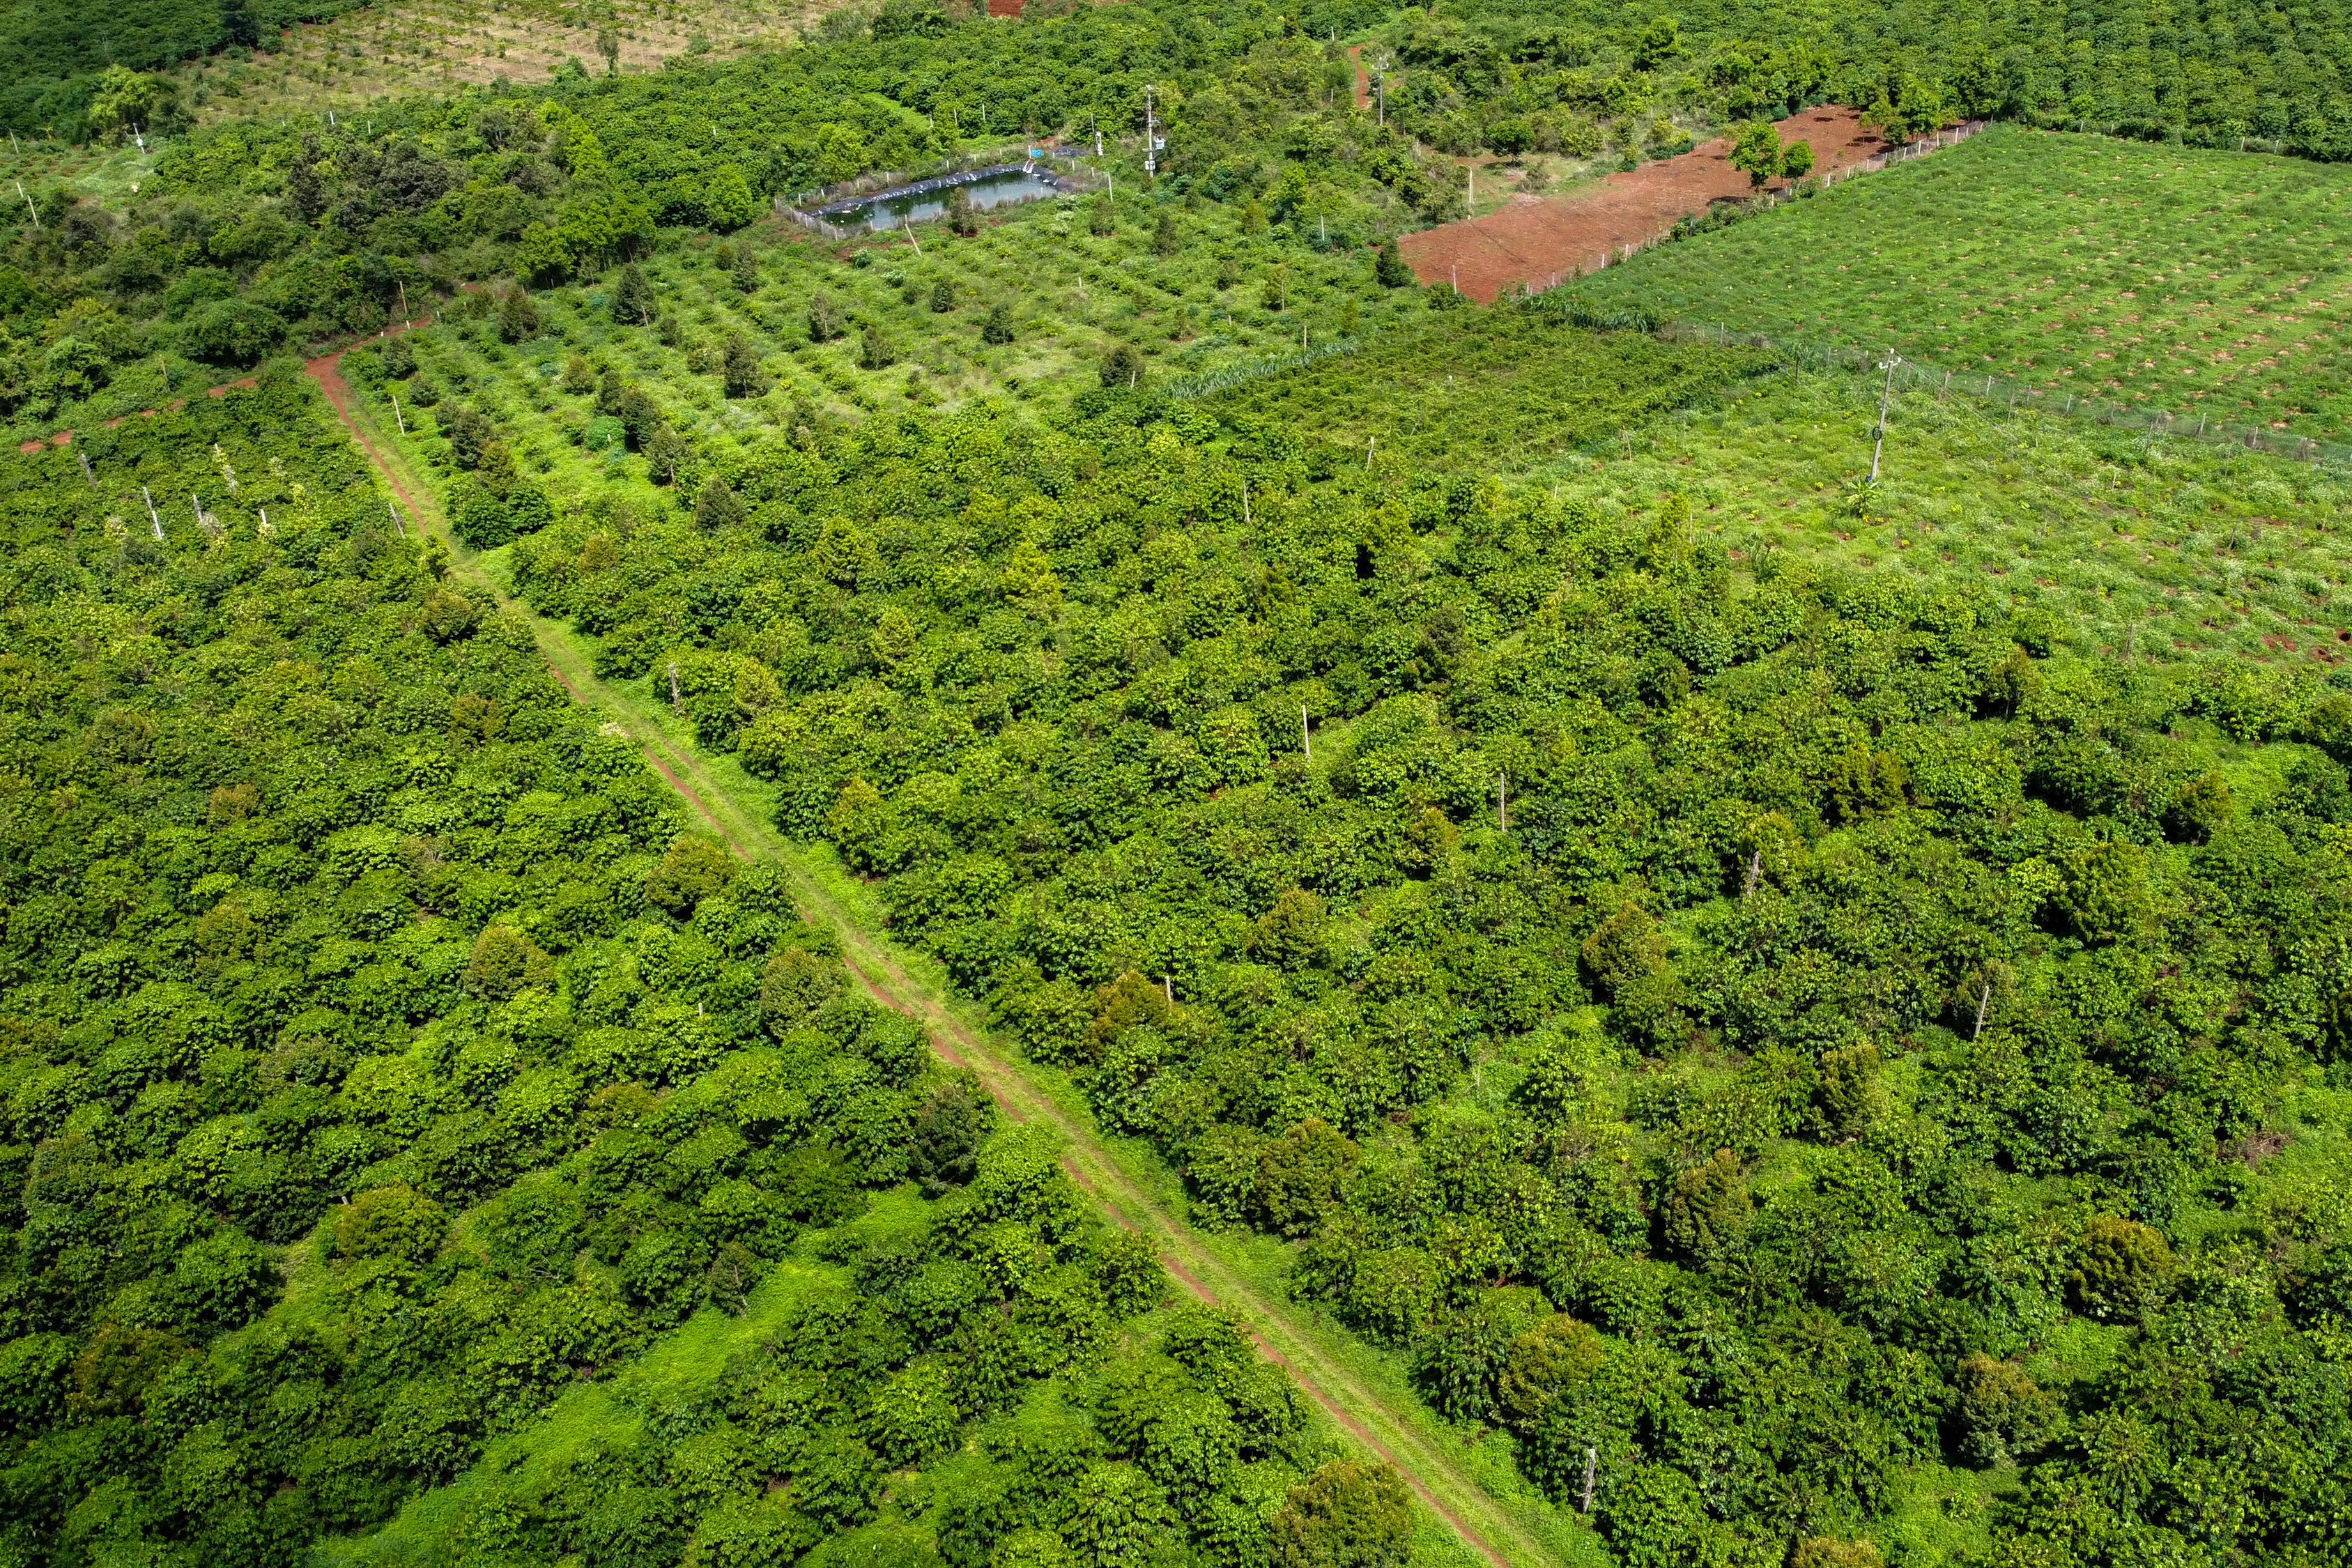 A drone view shows a coffee plantation belonging to Doan Van Thang, a coffee farmer, in Pleiku